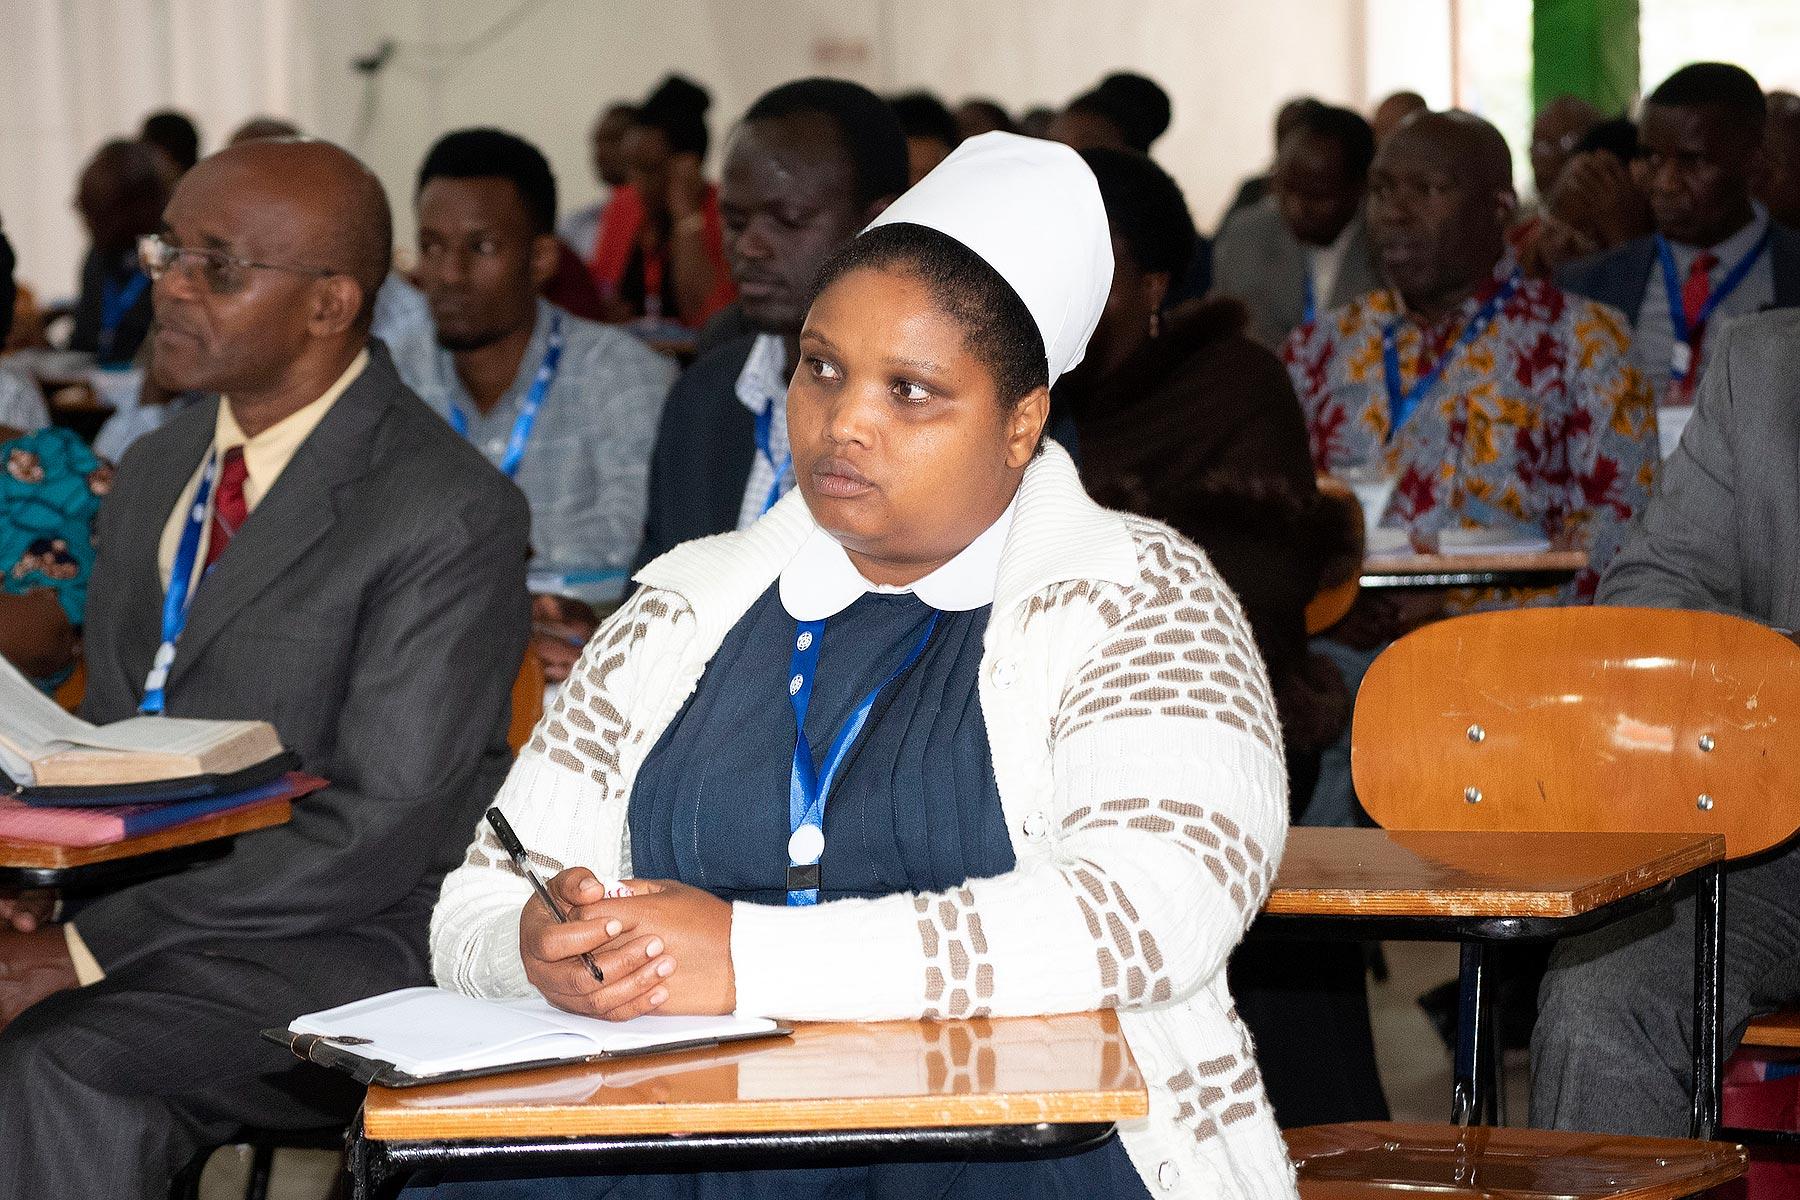 Delegates follow a presentation at the 20th General Assembly of the ELCT at the Tumaini University in Makumira, near Arusha, Tanzania. Photo: ELCT/Nengâida Lairumbe